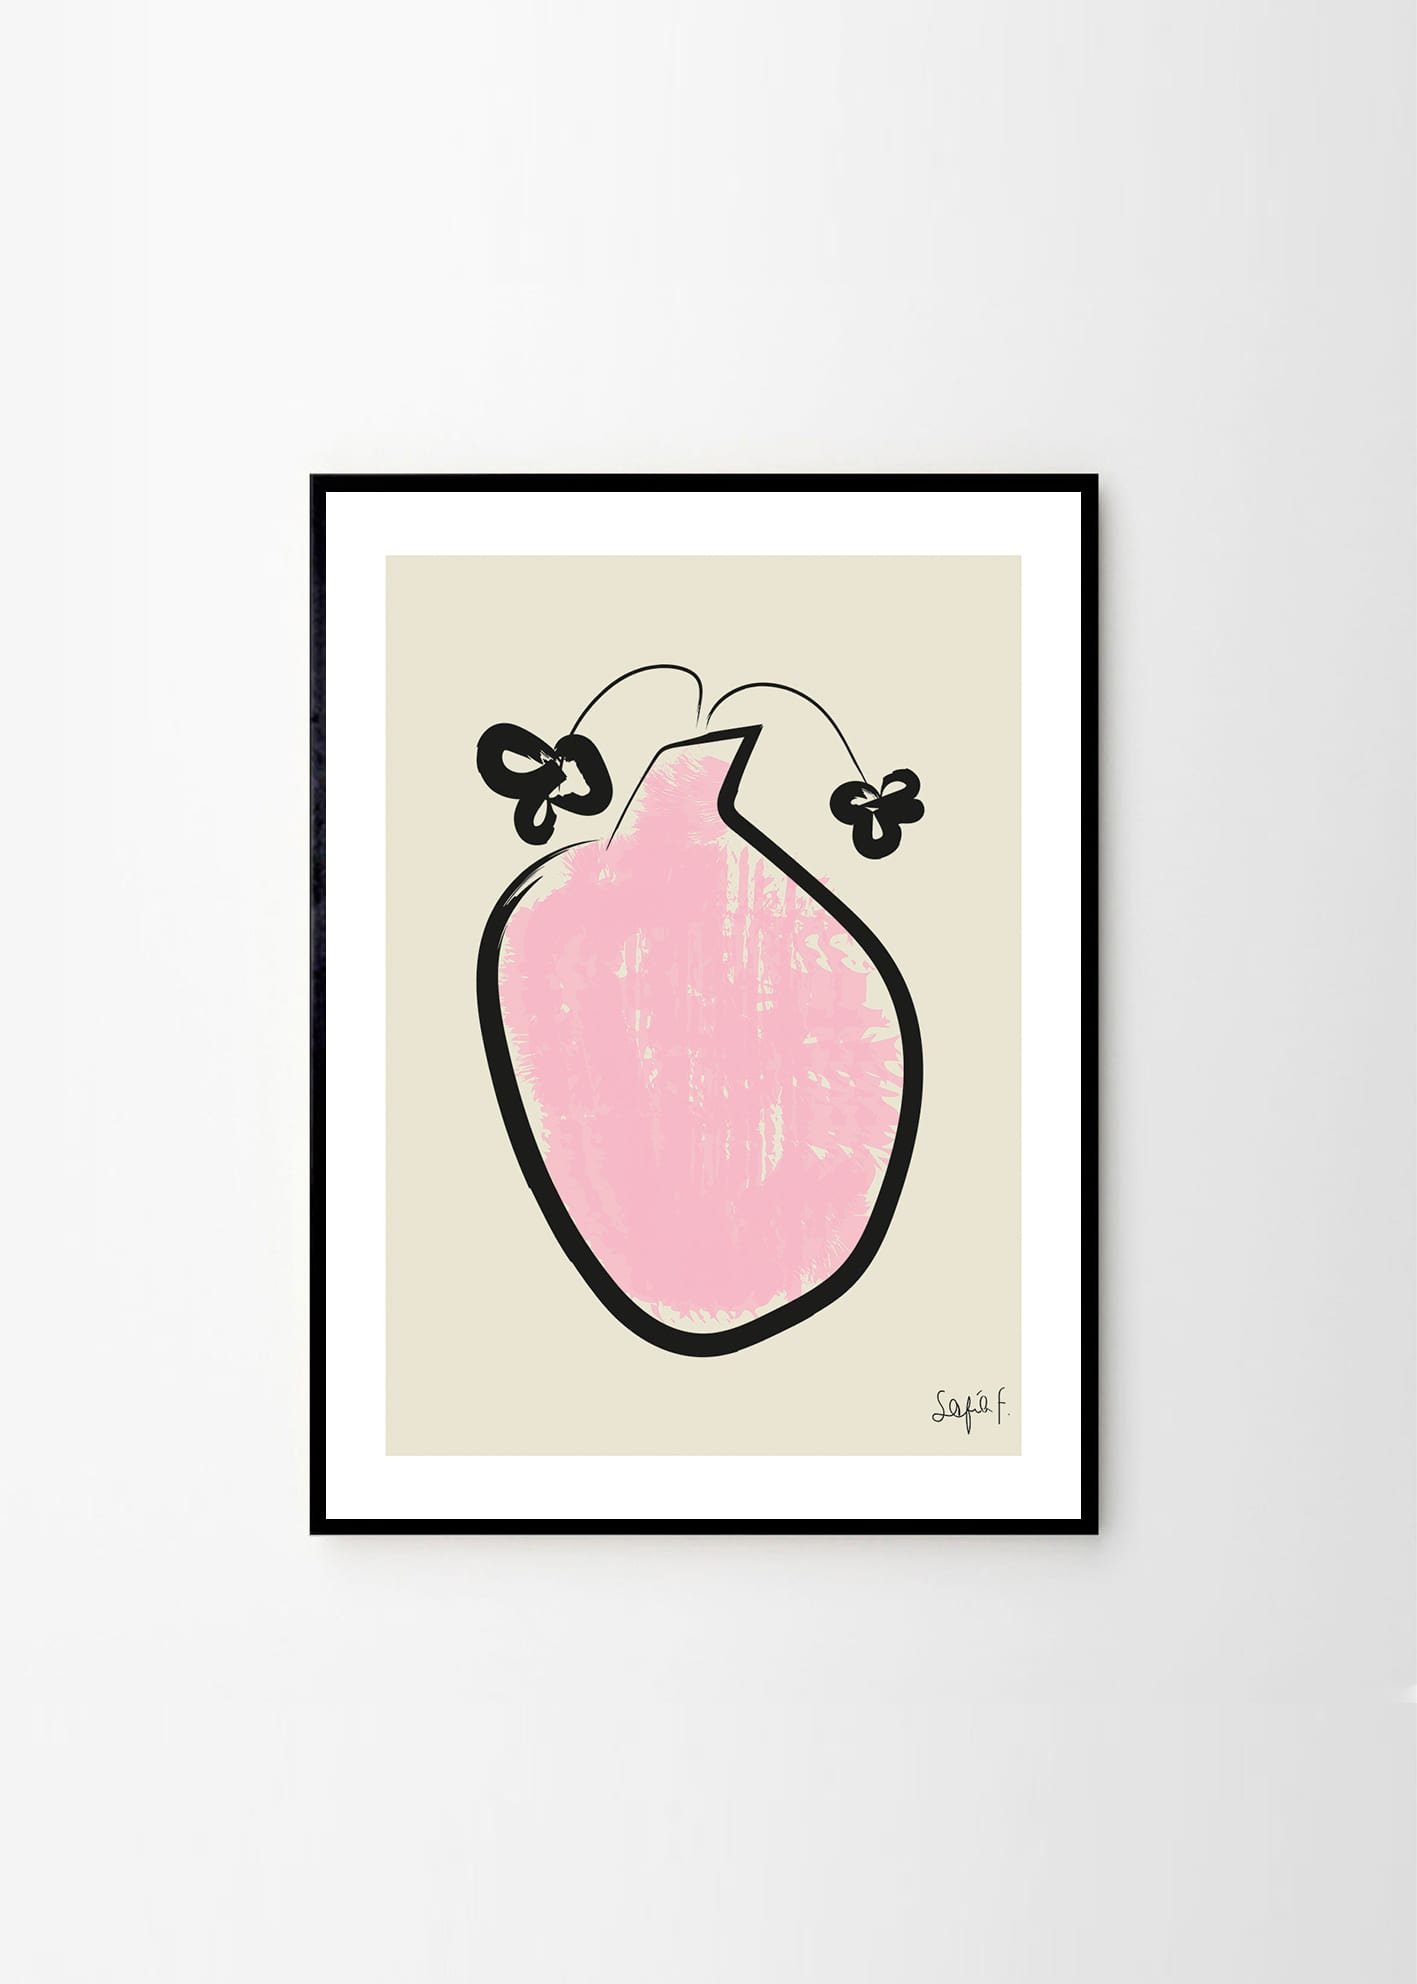 Sofia Freixas, Pink Vase art print exclusively for The Poster Club